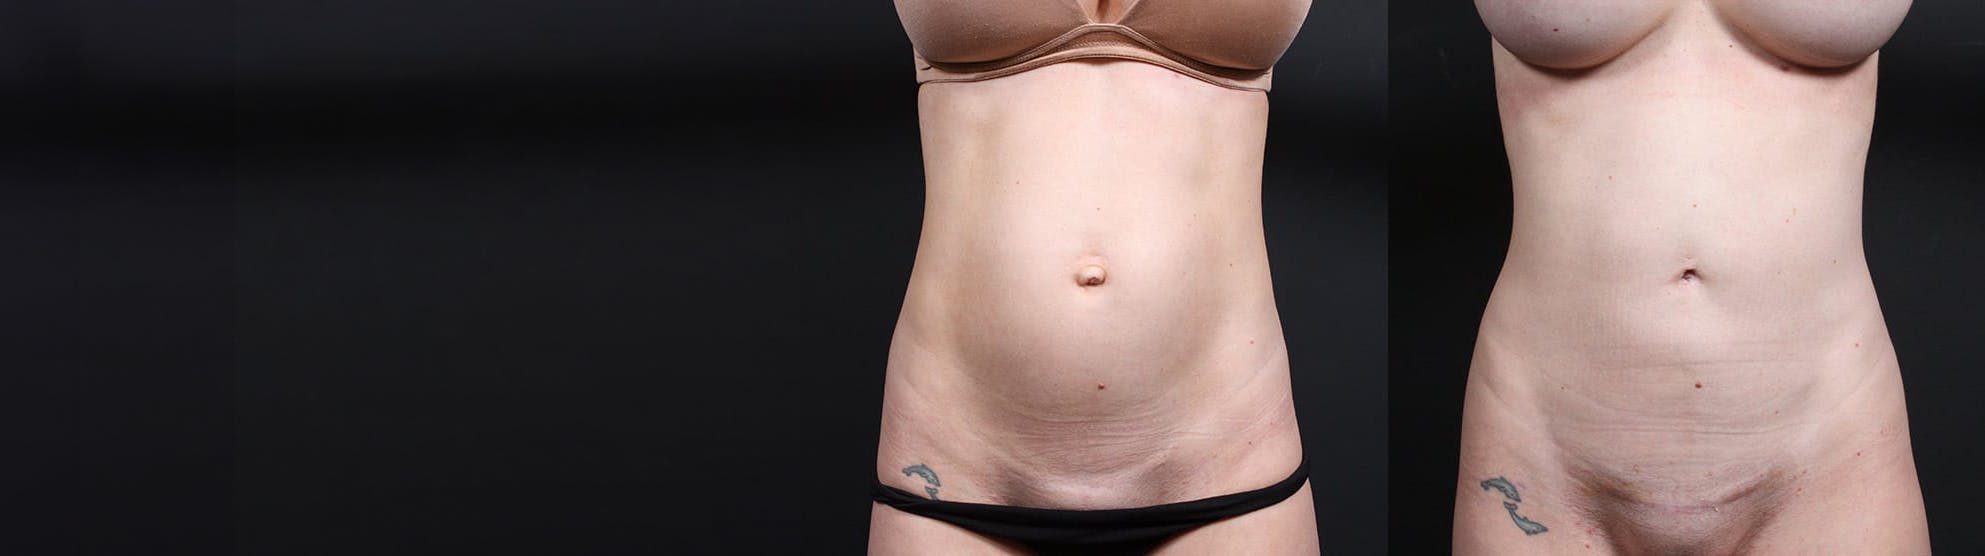 woman body with beige underwear on